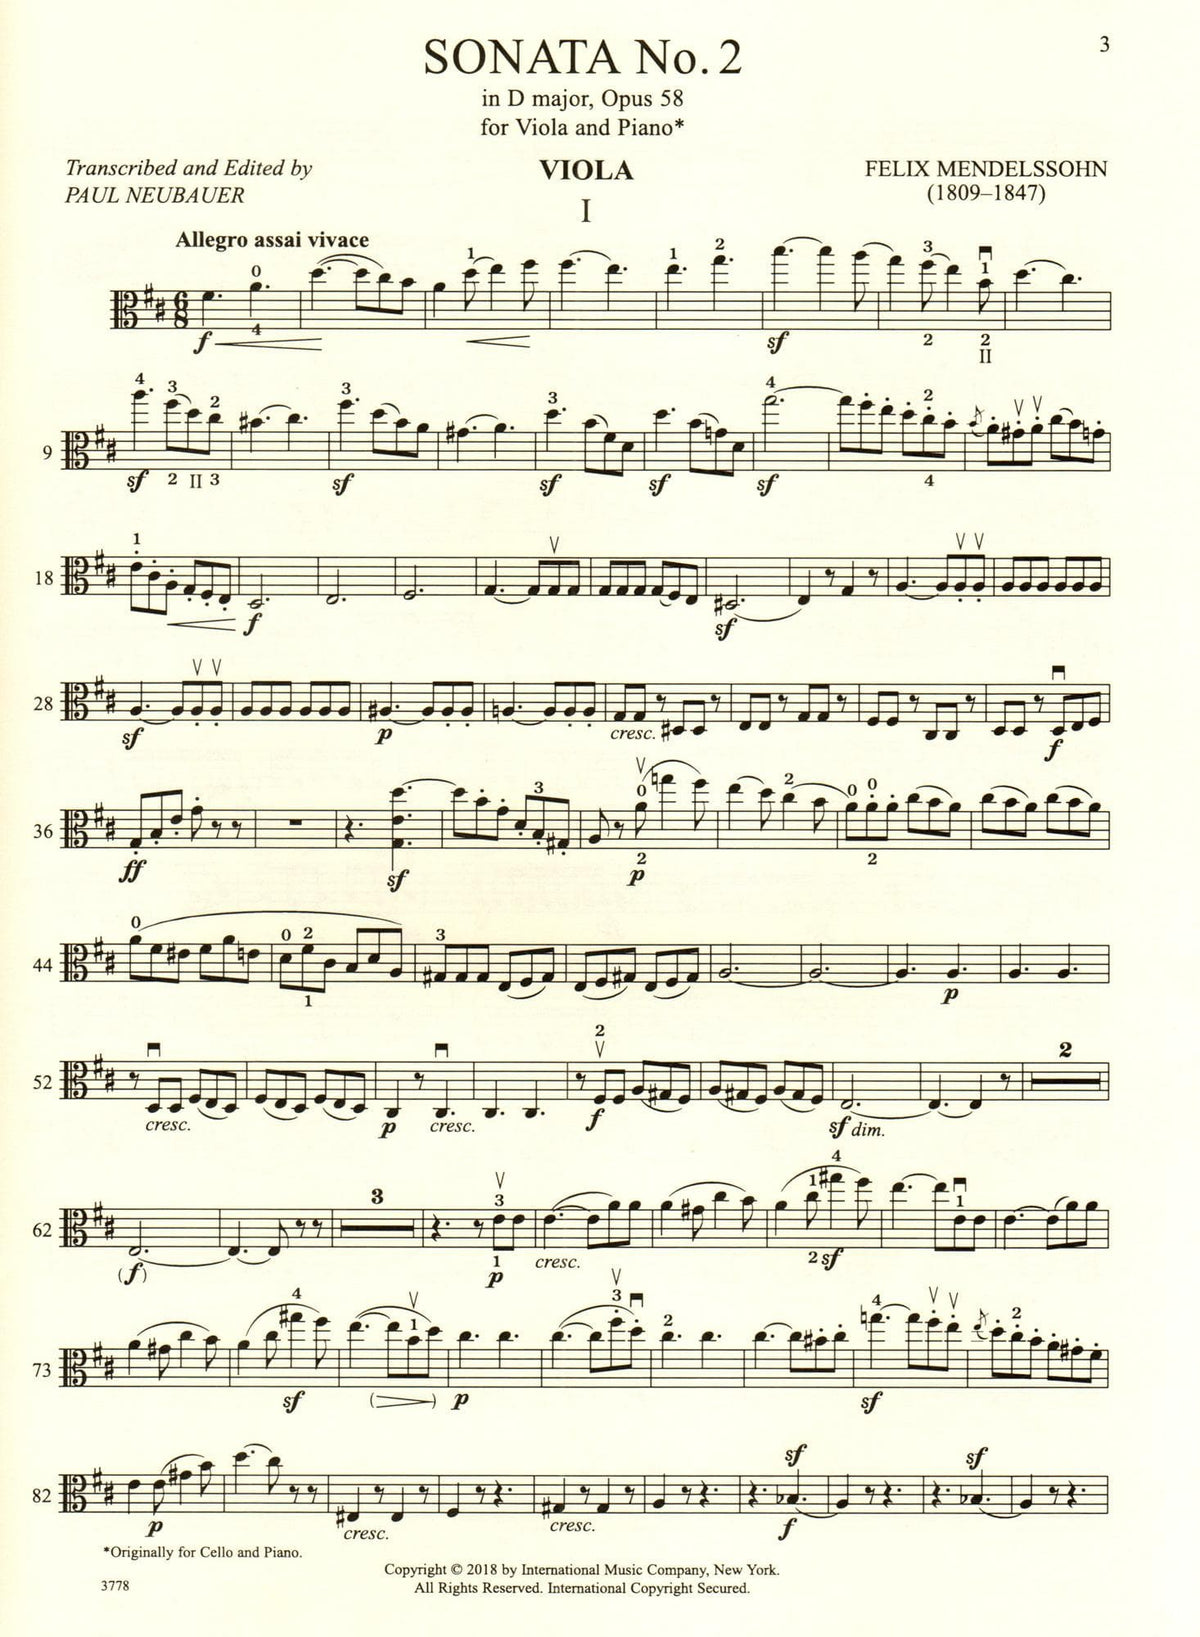 Mendelssohn, Felix - Sonata No. 2 in D major, Op 58 - Viola and Piano - edited by Paul Neubauer - International